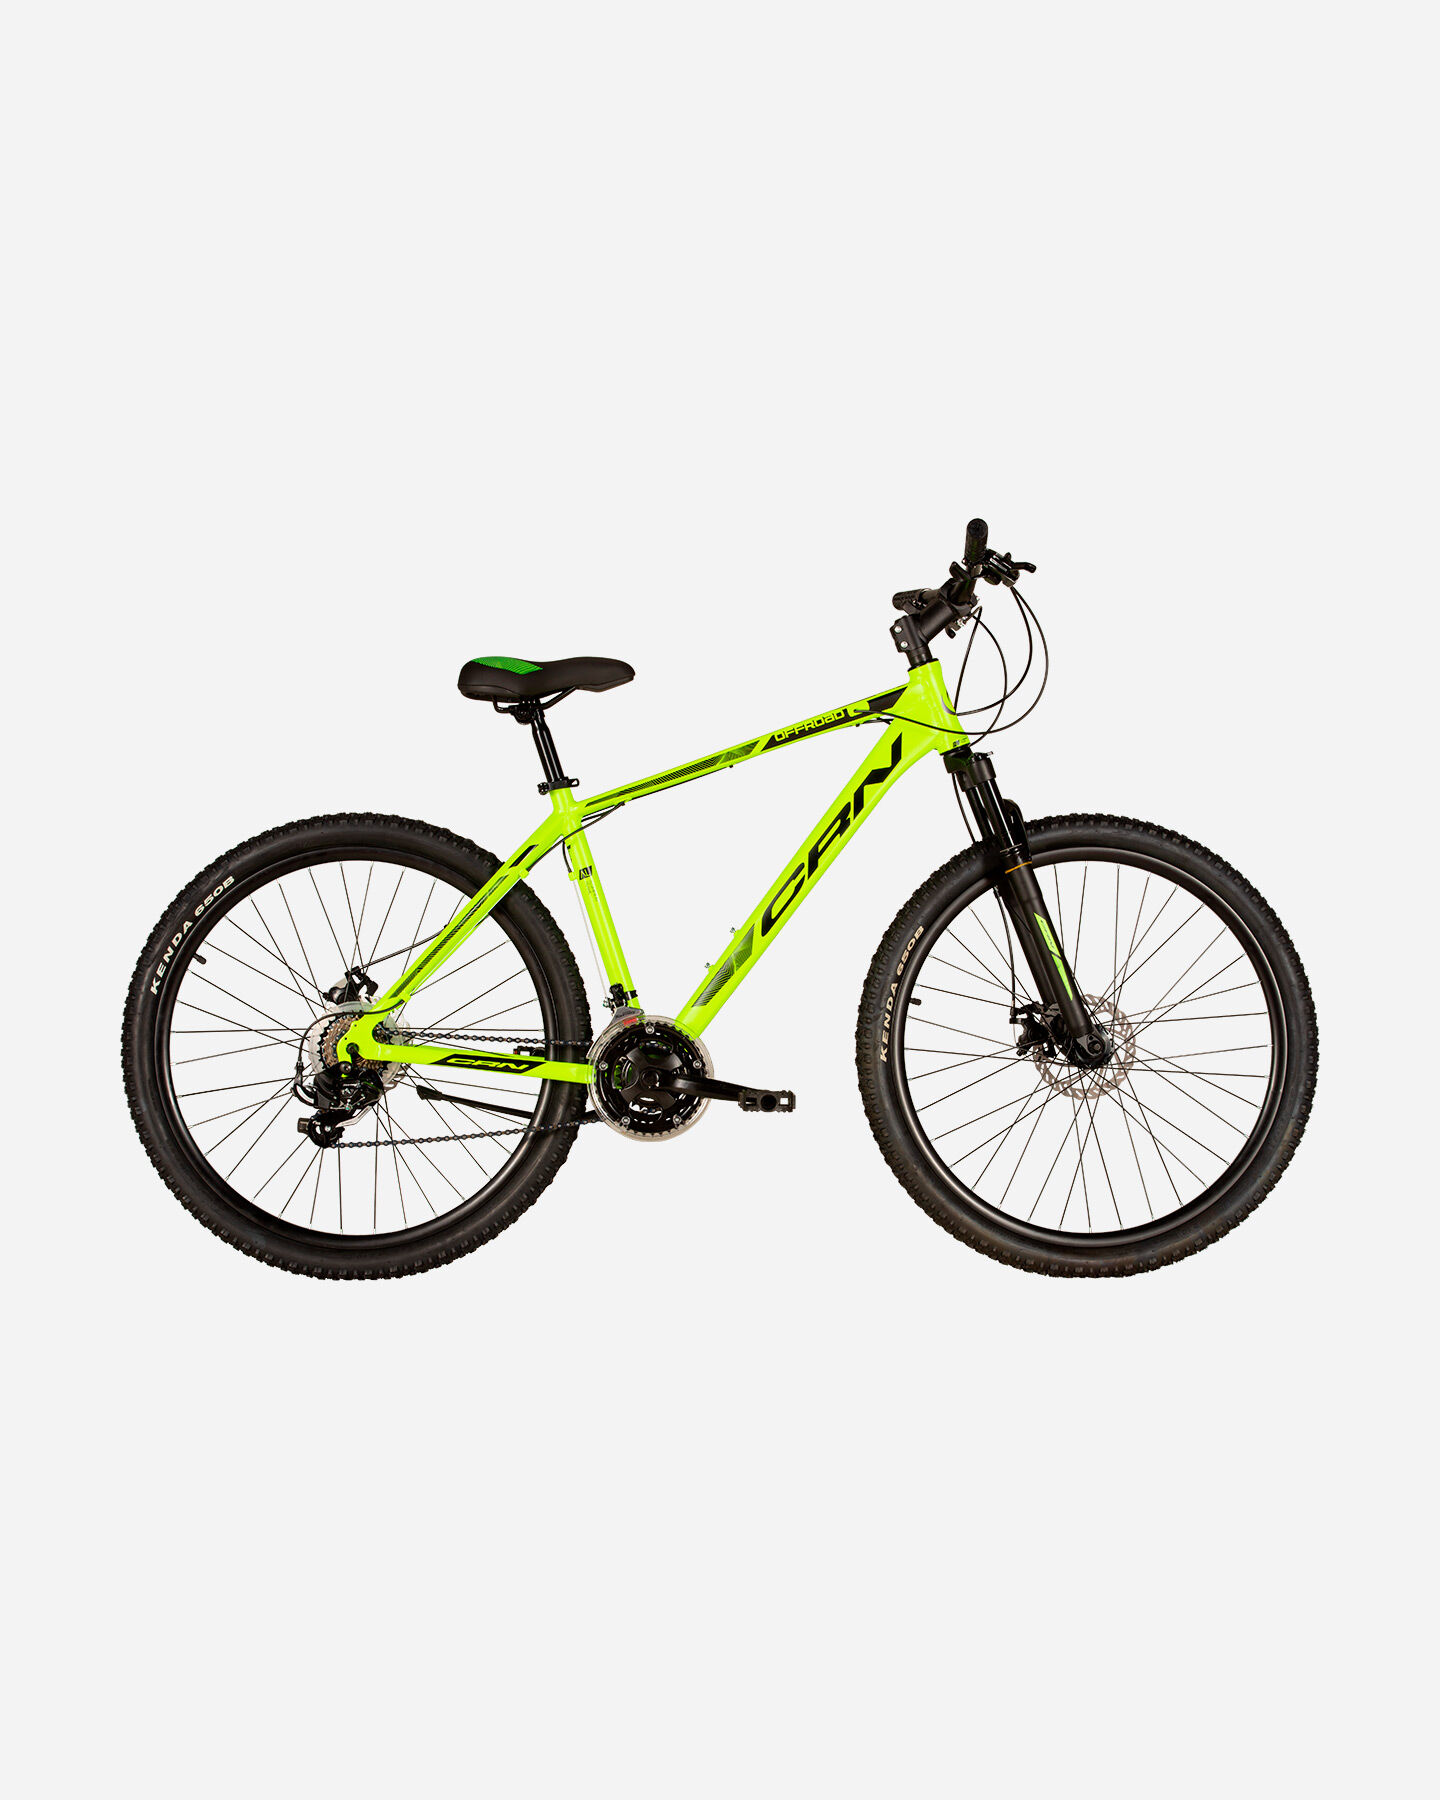  Mountain bike CARNIELLI MOUNTAIN BIKE 1000  S4113182|1|15 scatto 0